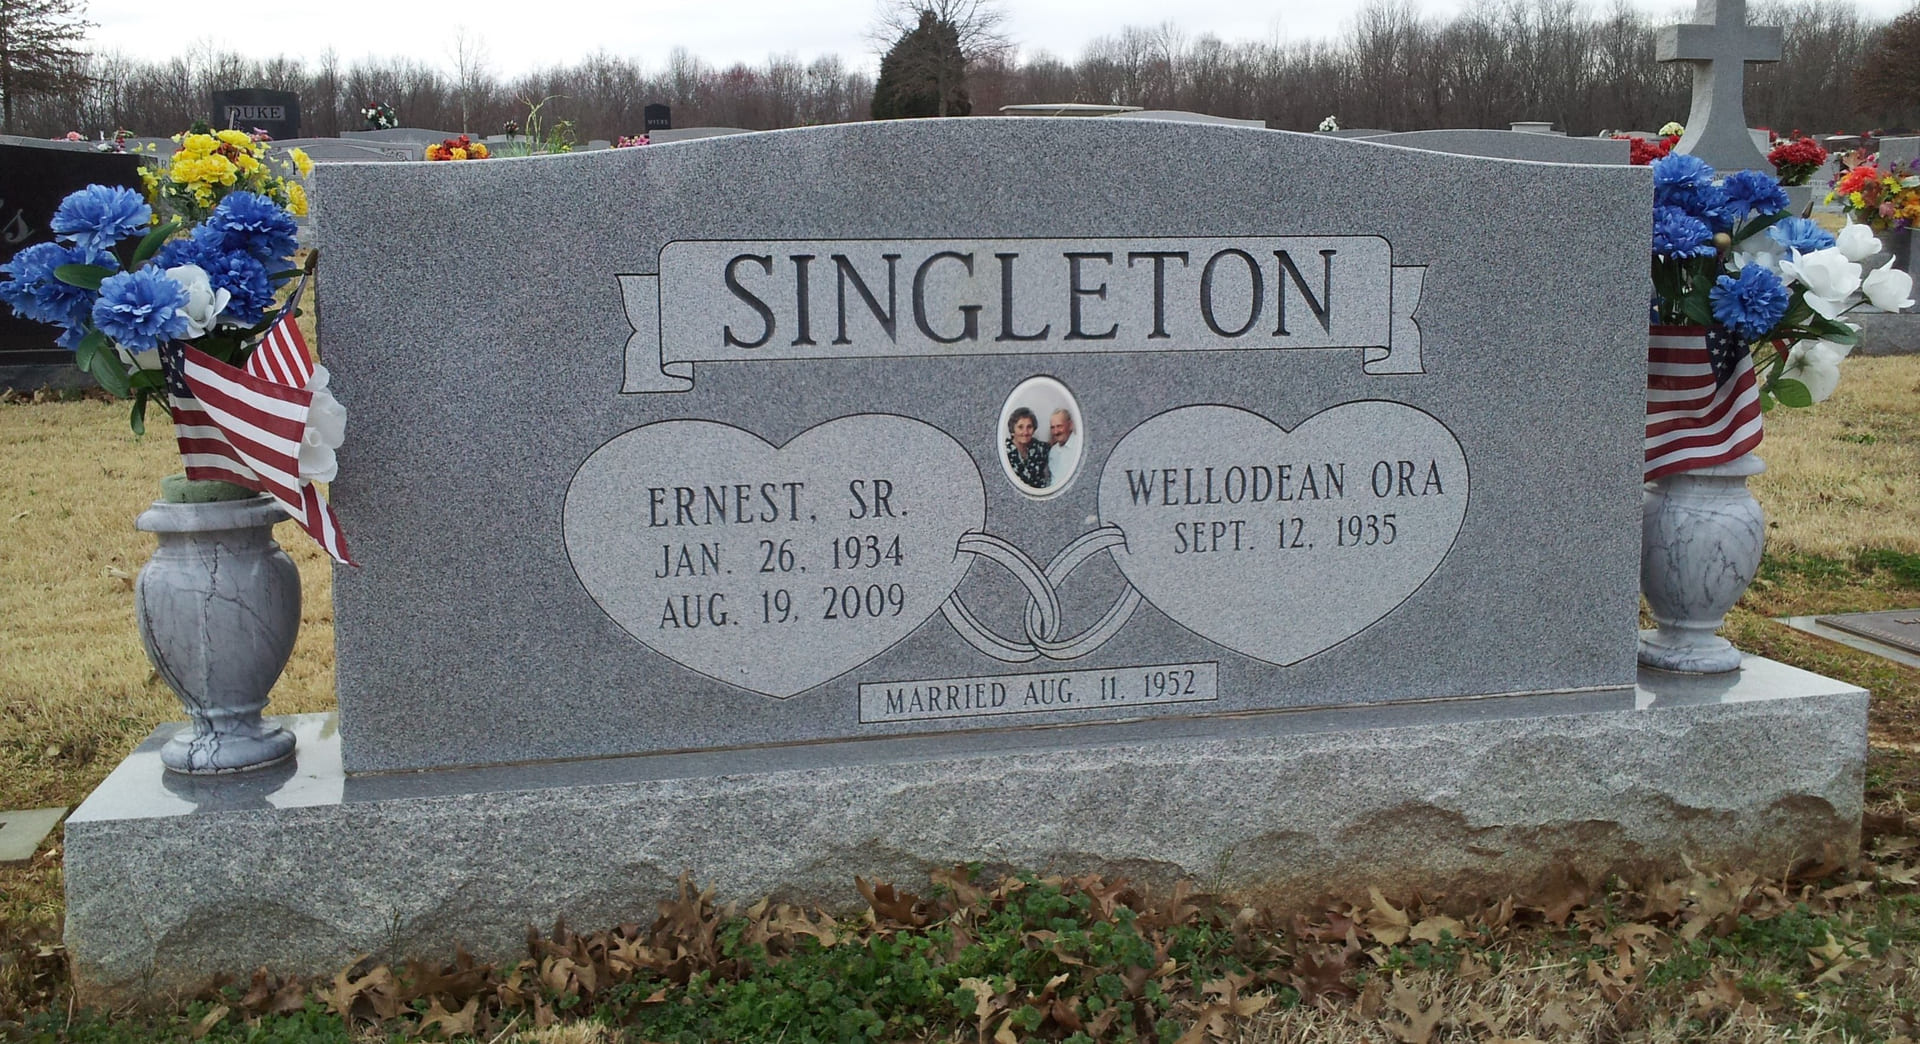 A memorial slab for Ernest SR. and Wellodean Ora